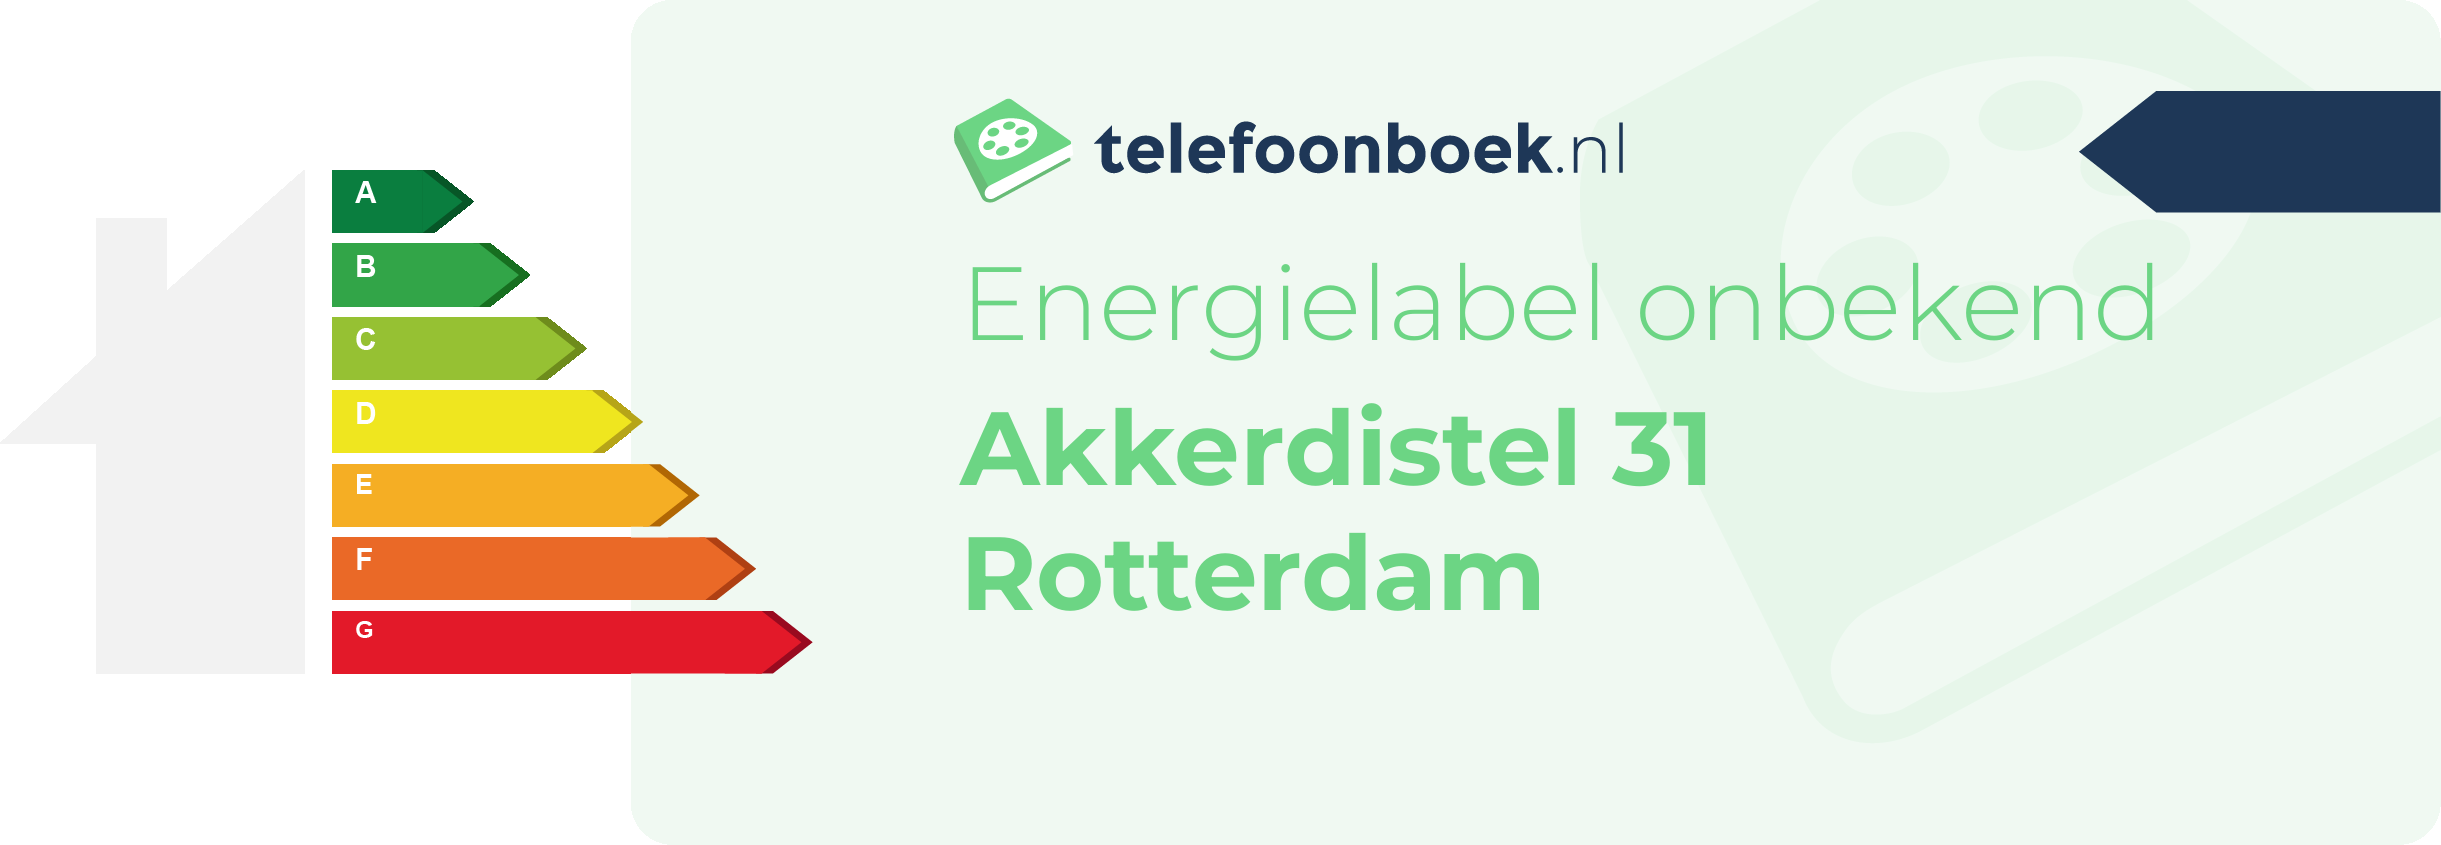 Energielabel Akkerdistel 31 Rotterdam